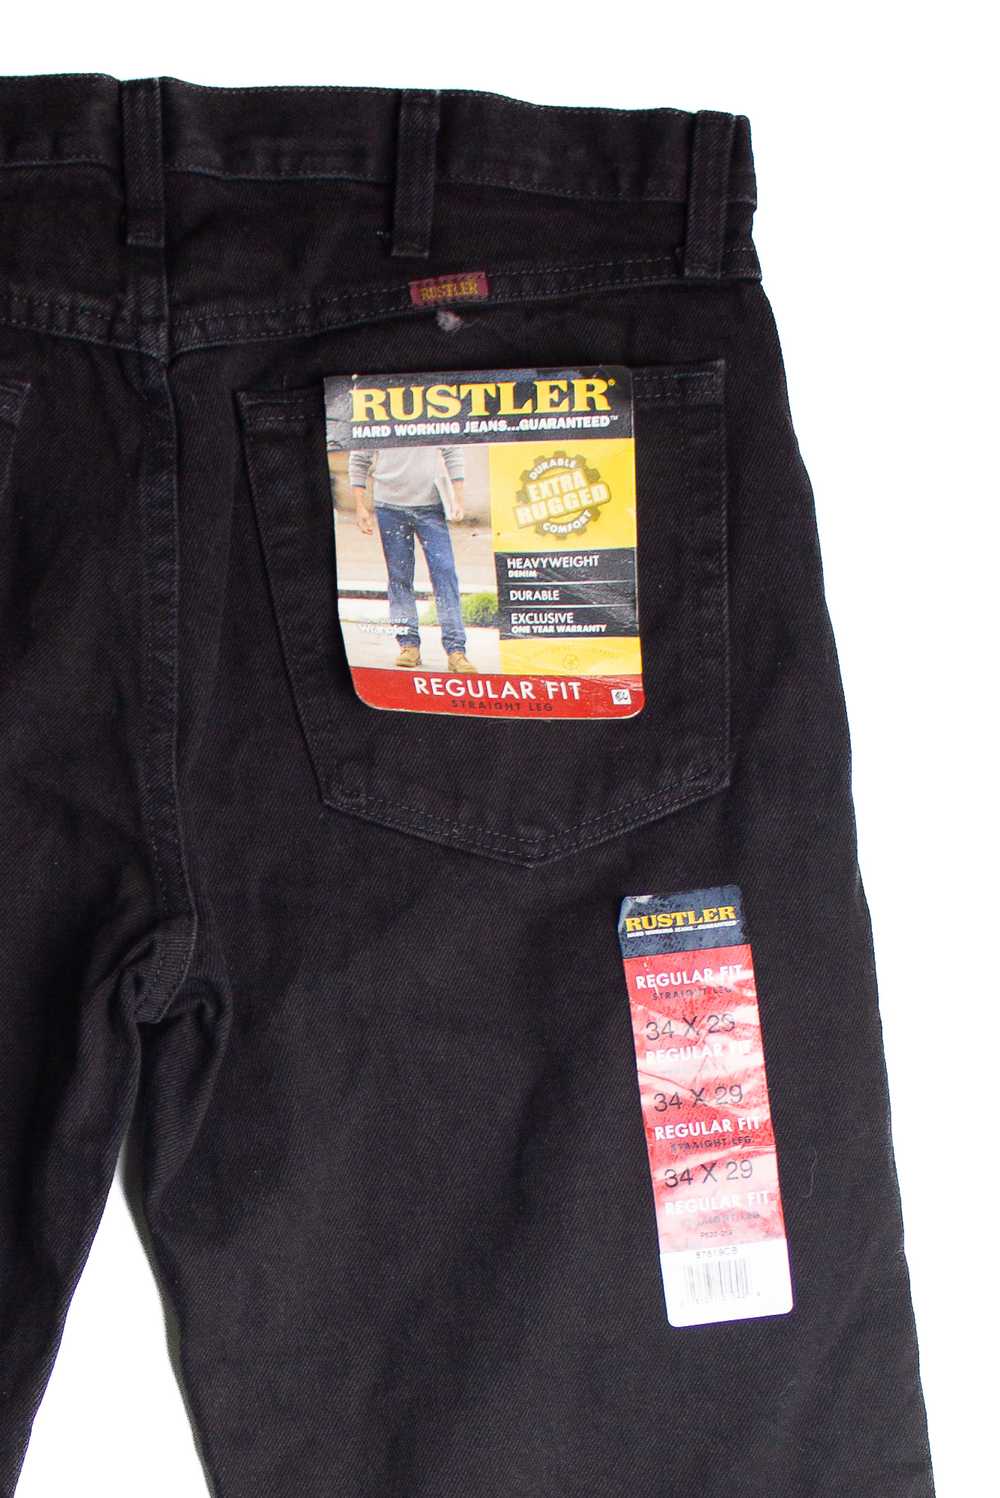 Deadstock Vintage Rustler Denim Jeans (1990s) 1015 - image 2